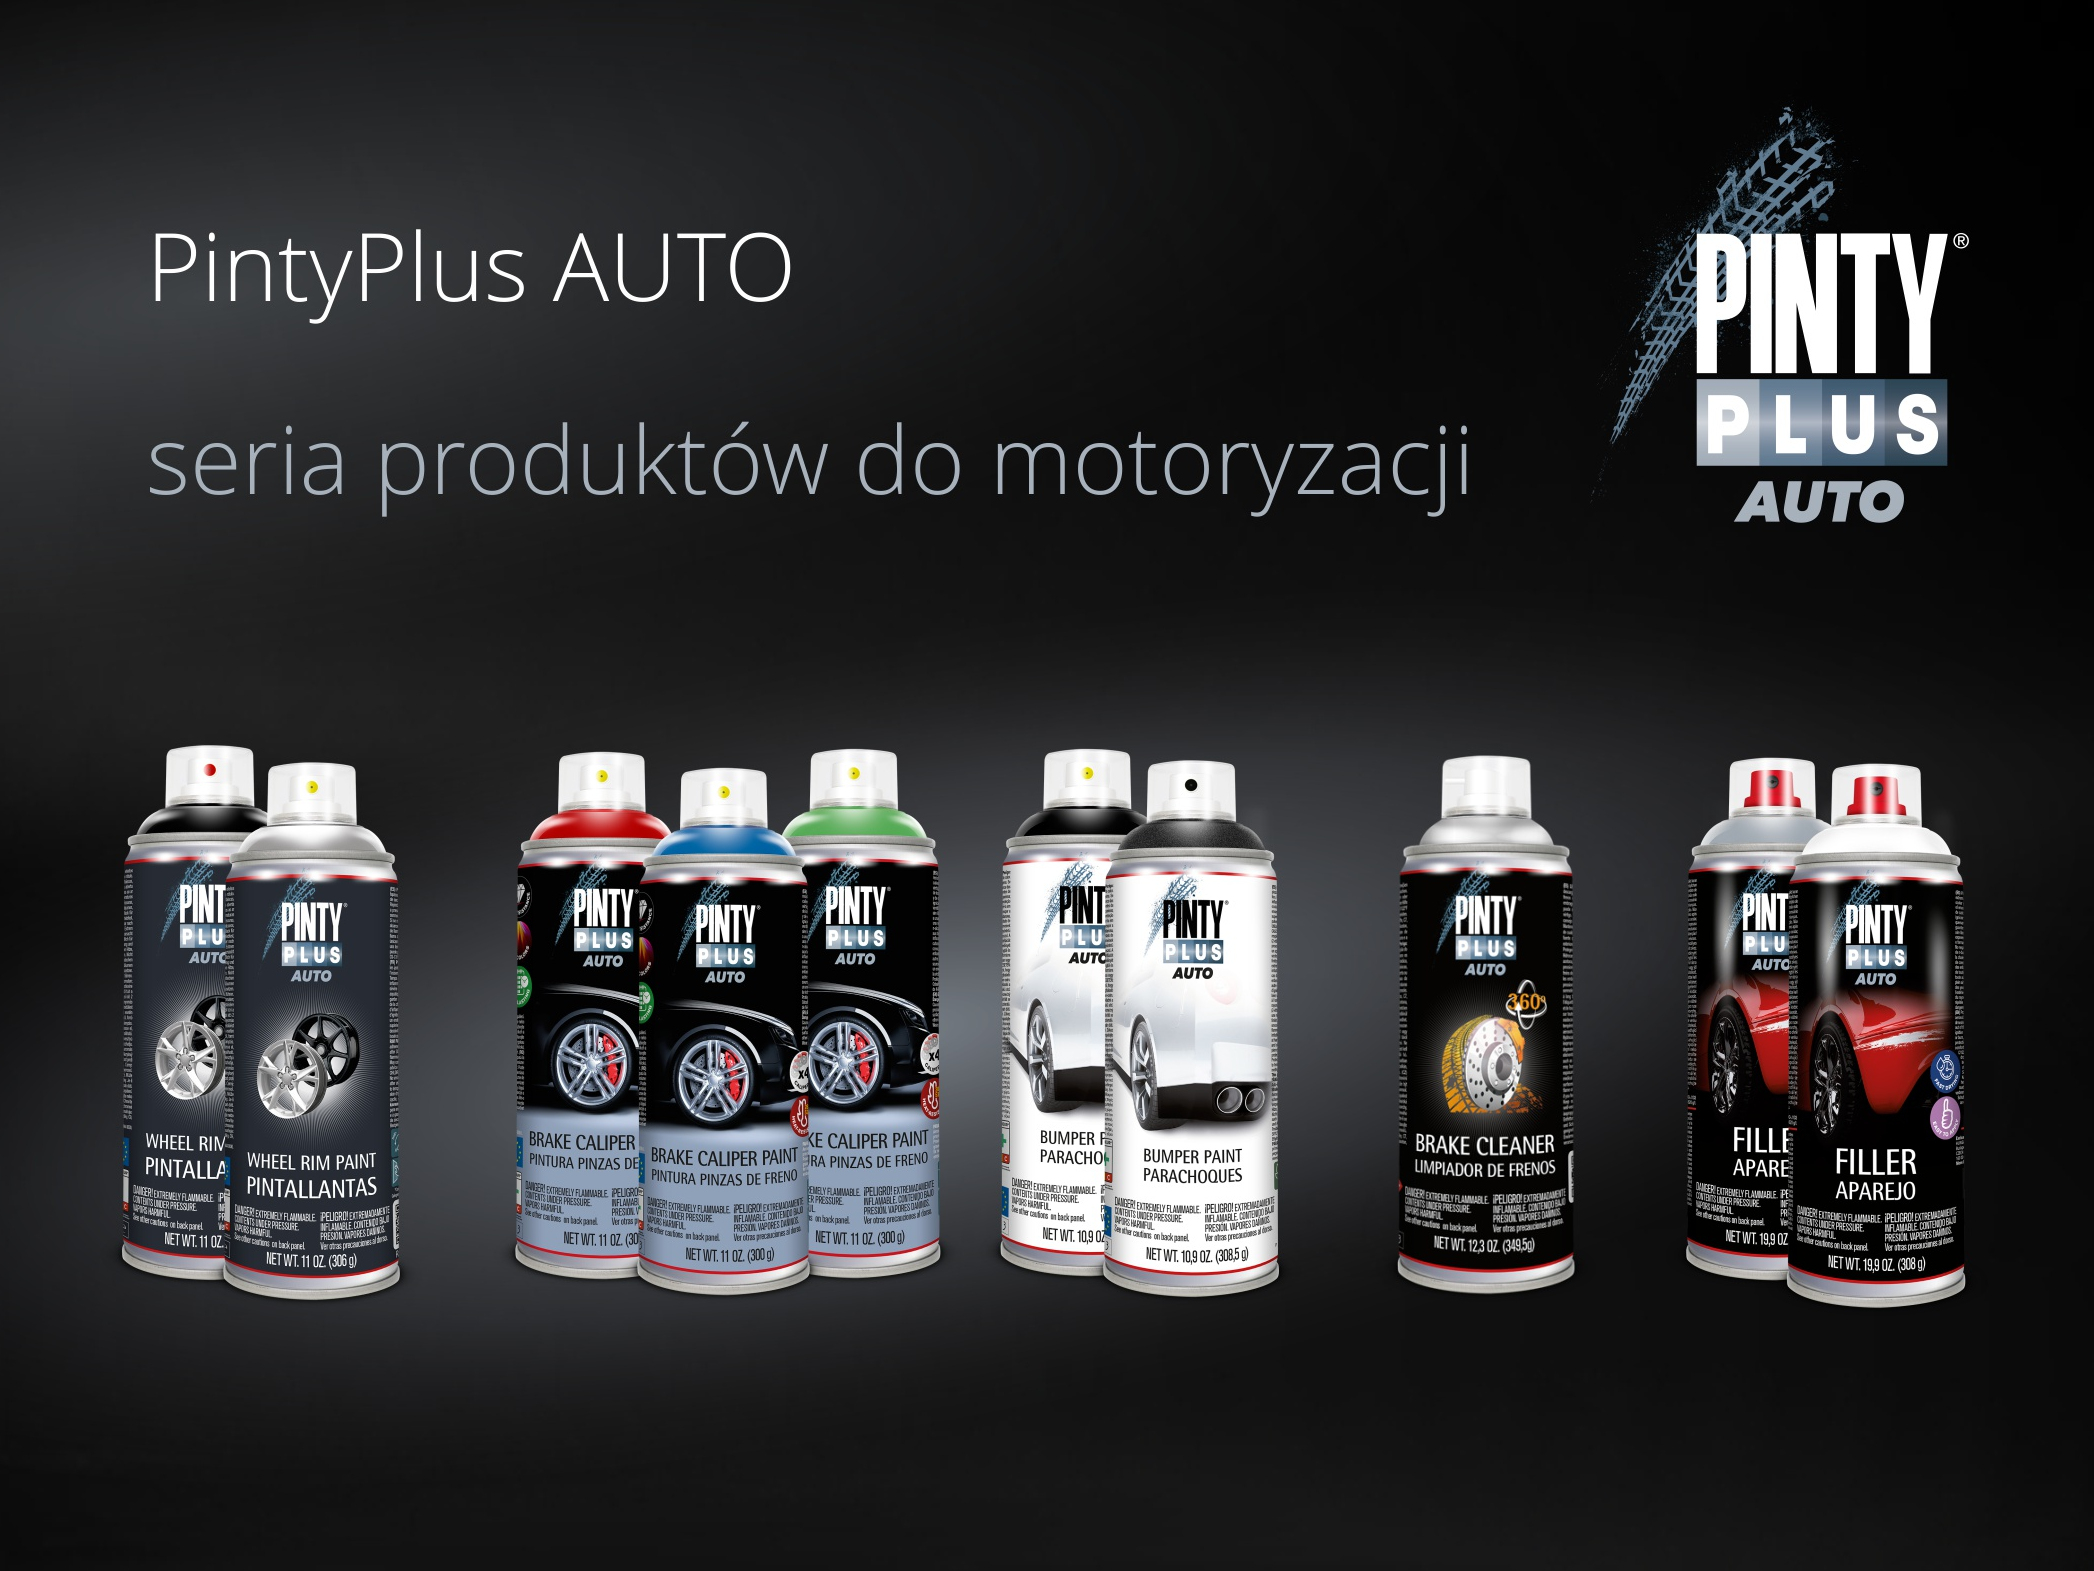 PintyPlus AUTO news